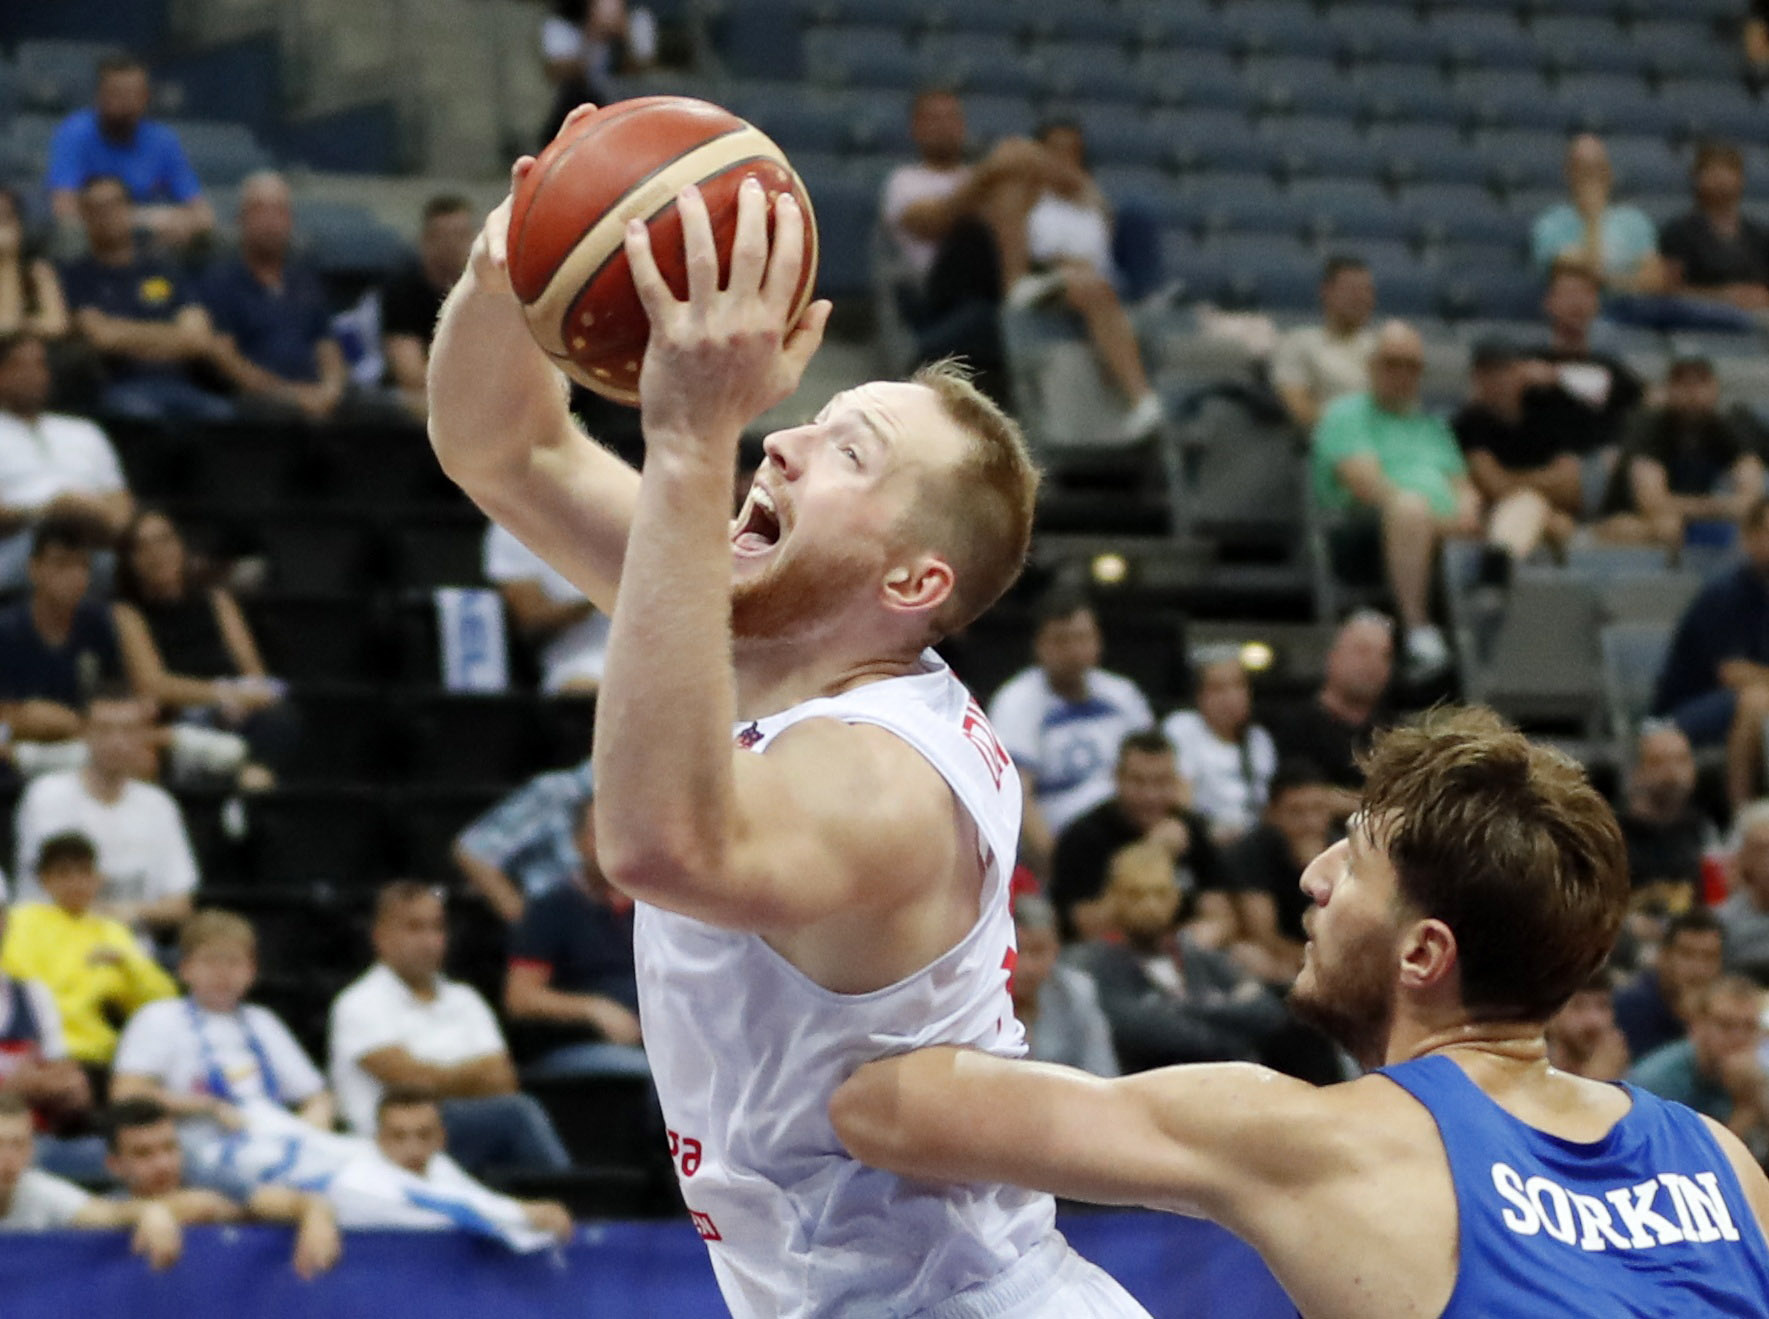 Eurobasket 2022, Πολωνία – Ισραήλ 85-76: Μεγάλο βήμα πρόκρισης με Σλότερ πρωταγωνιστή